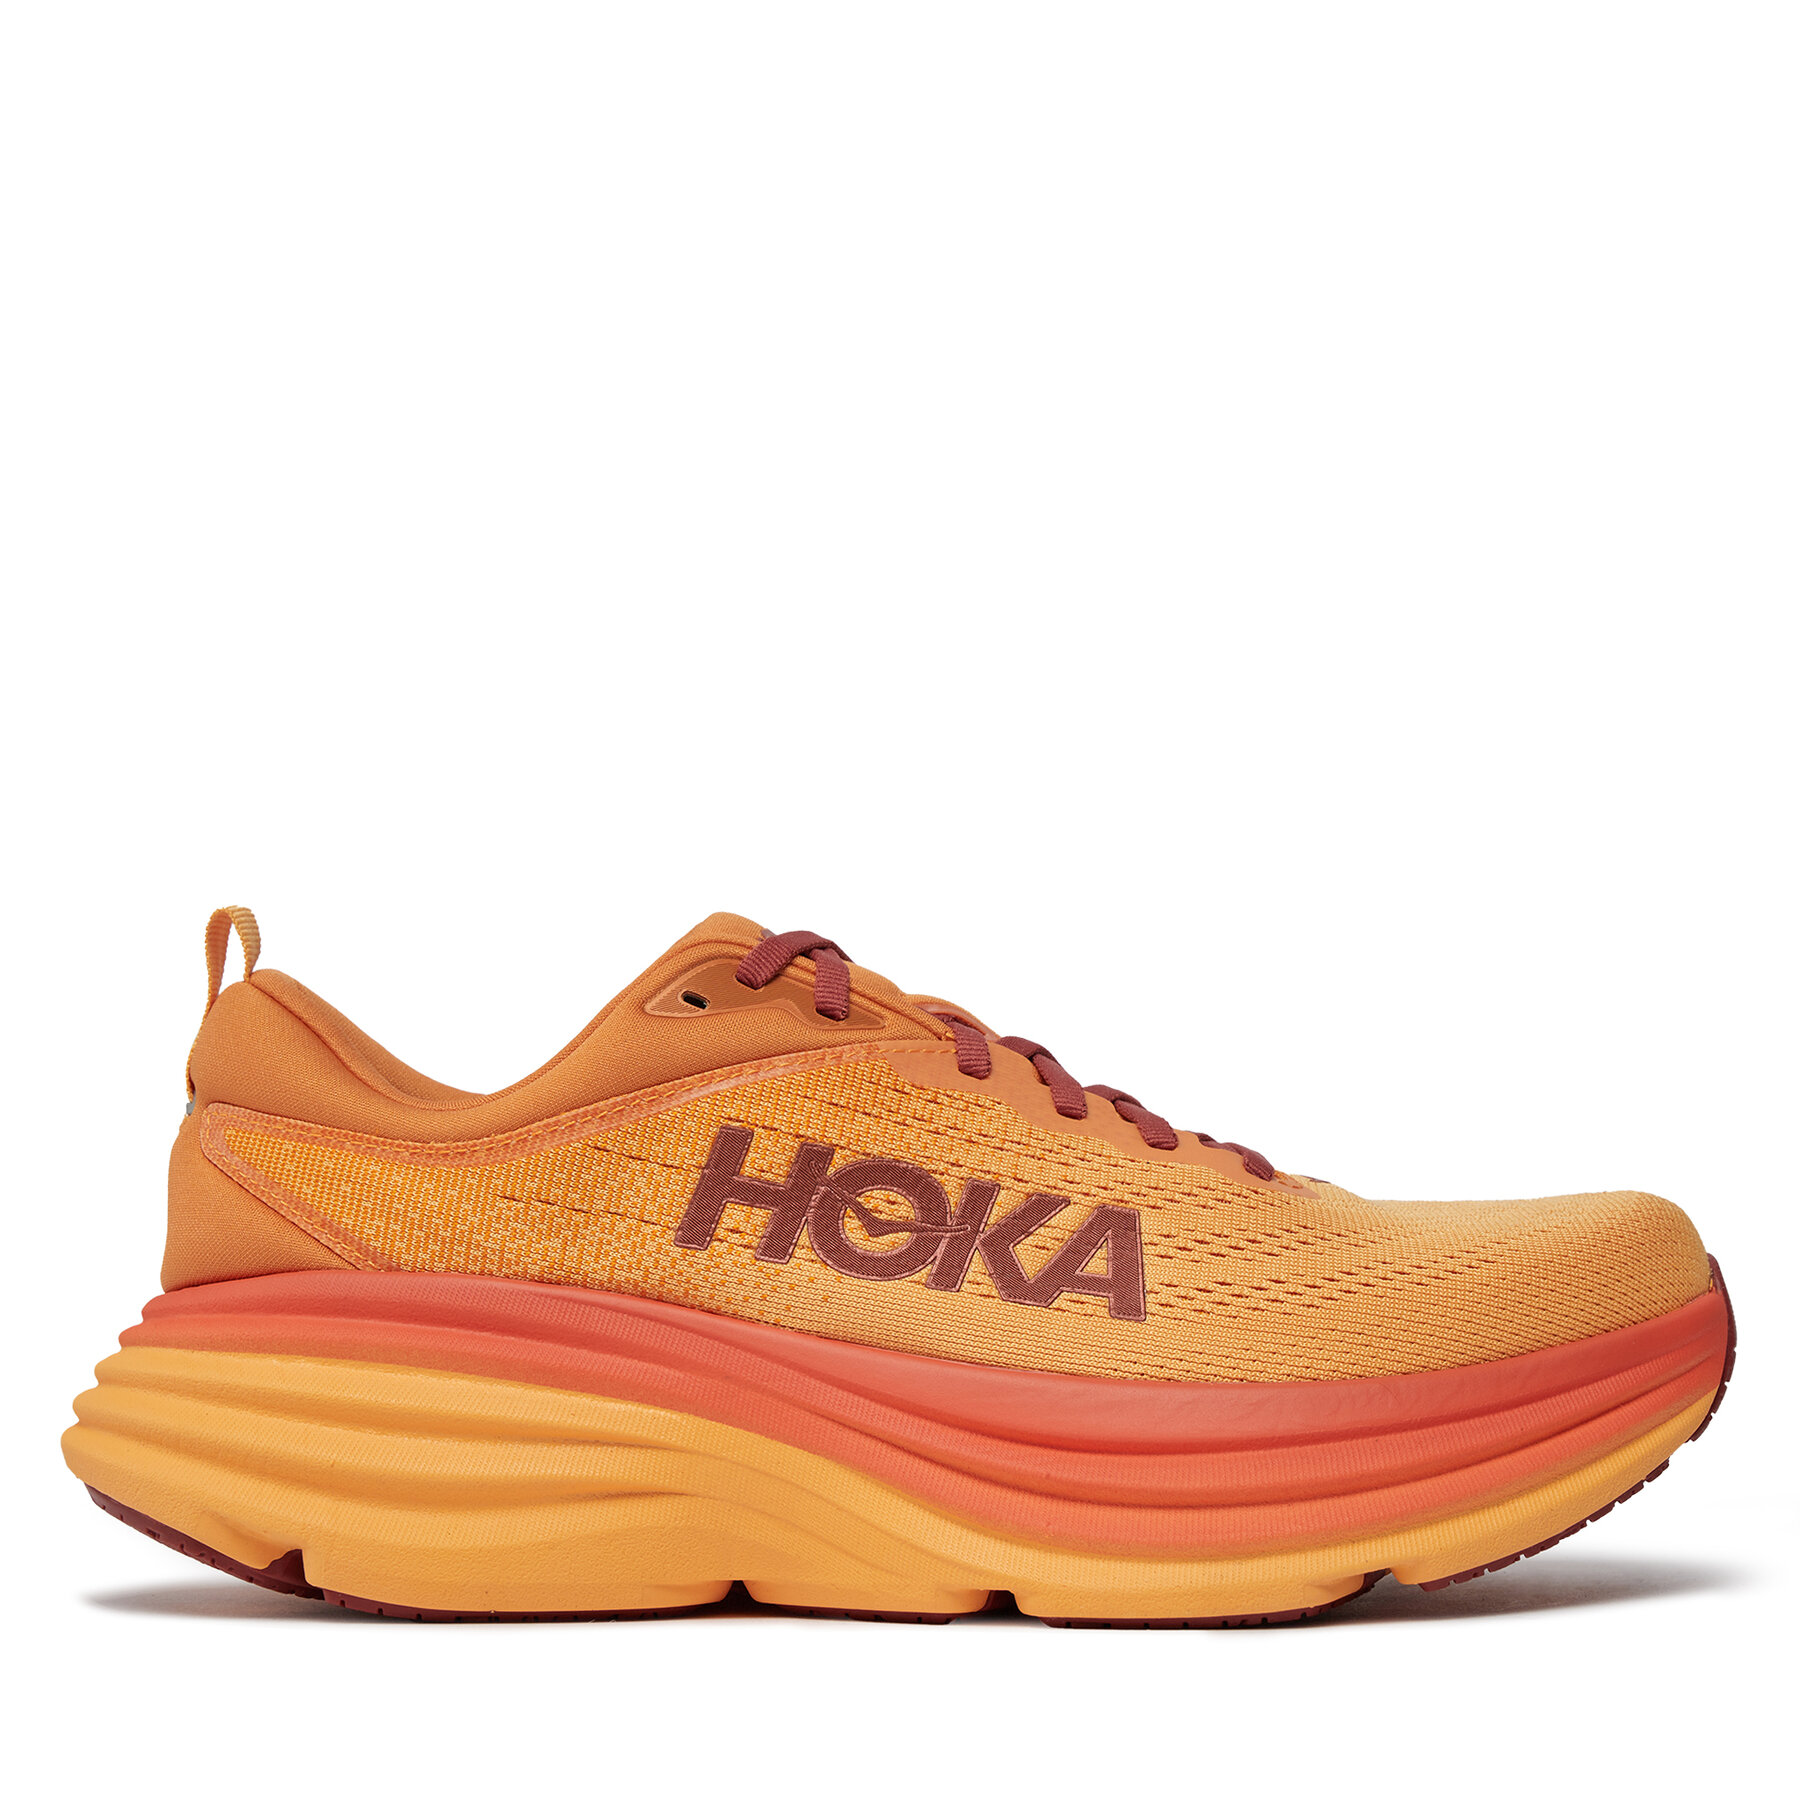 HOKA BONDI 8 - Zapatos